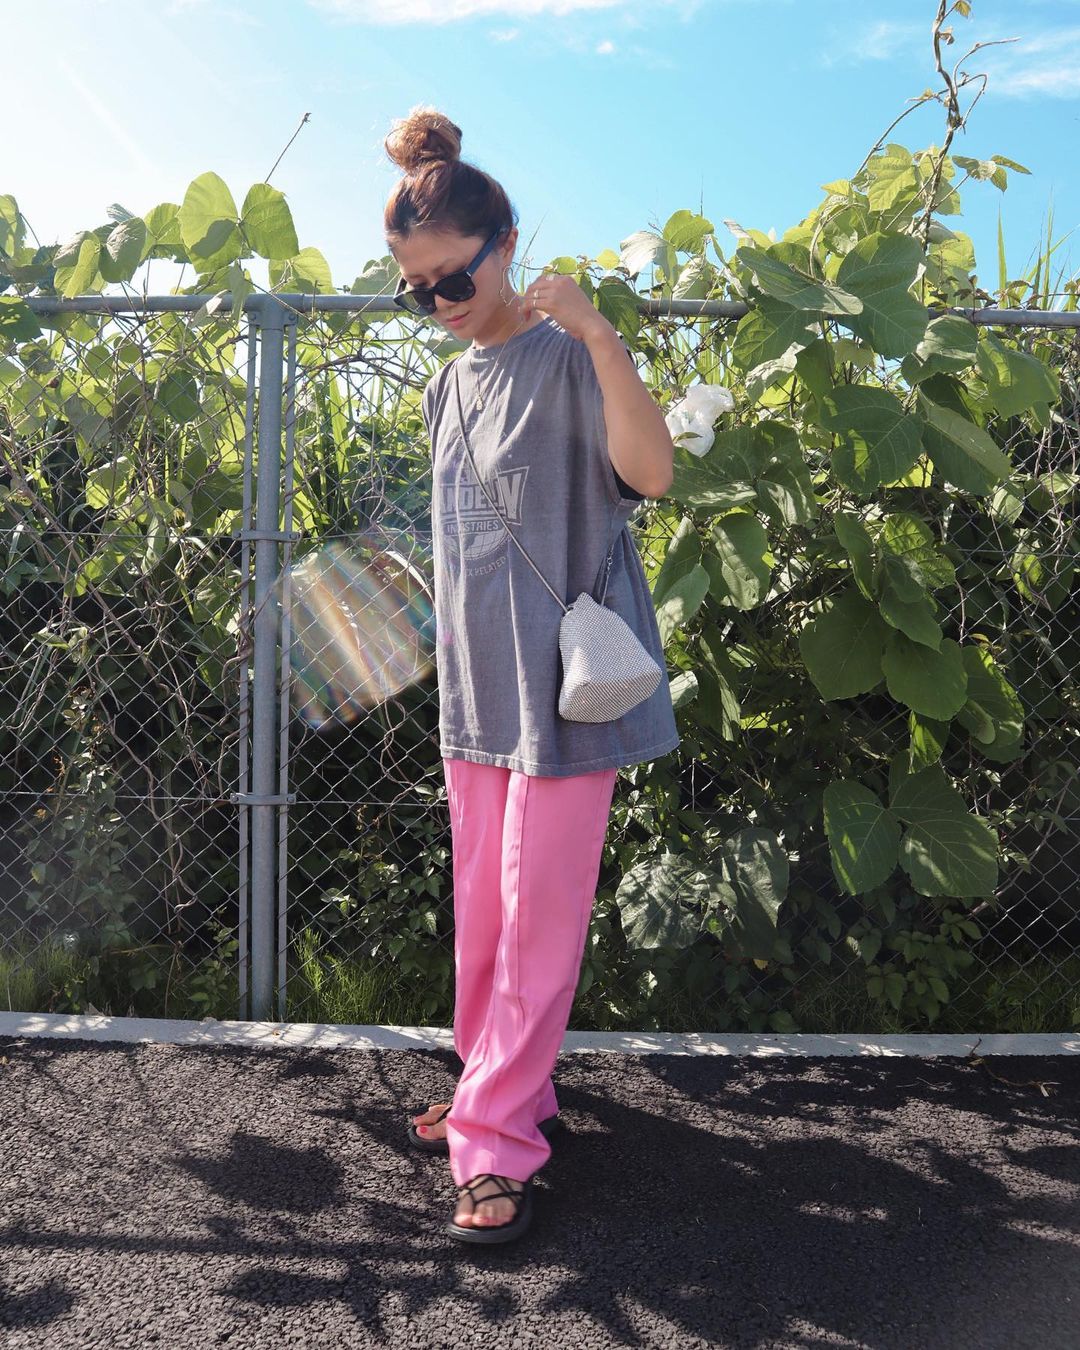 Teva Sandal Styling Idea Outfit Summer テバ サンダル コーディネート スタイリング 夏